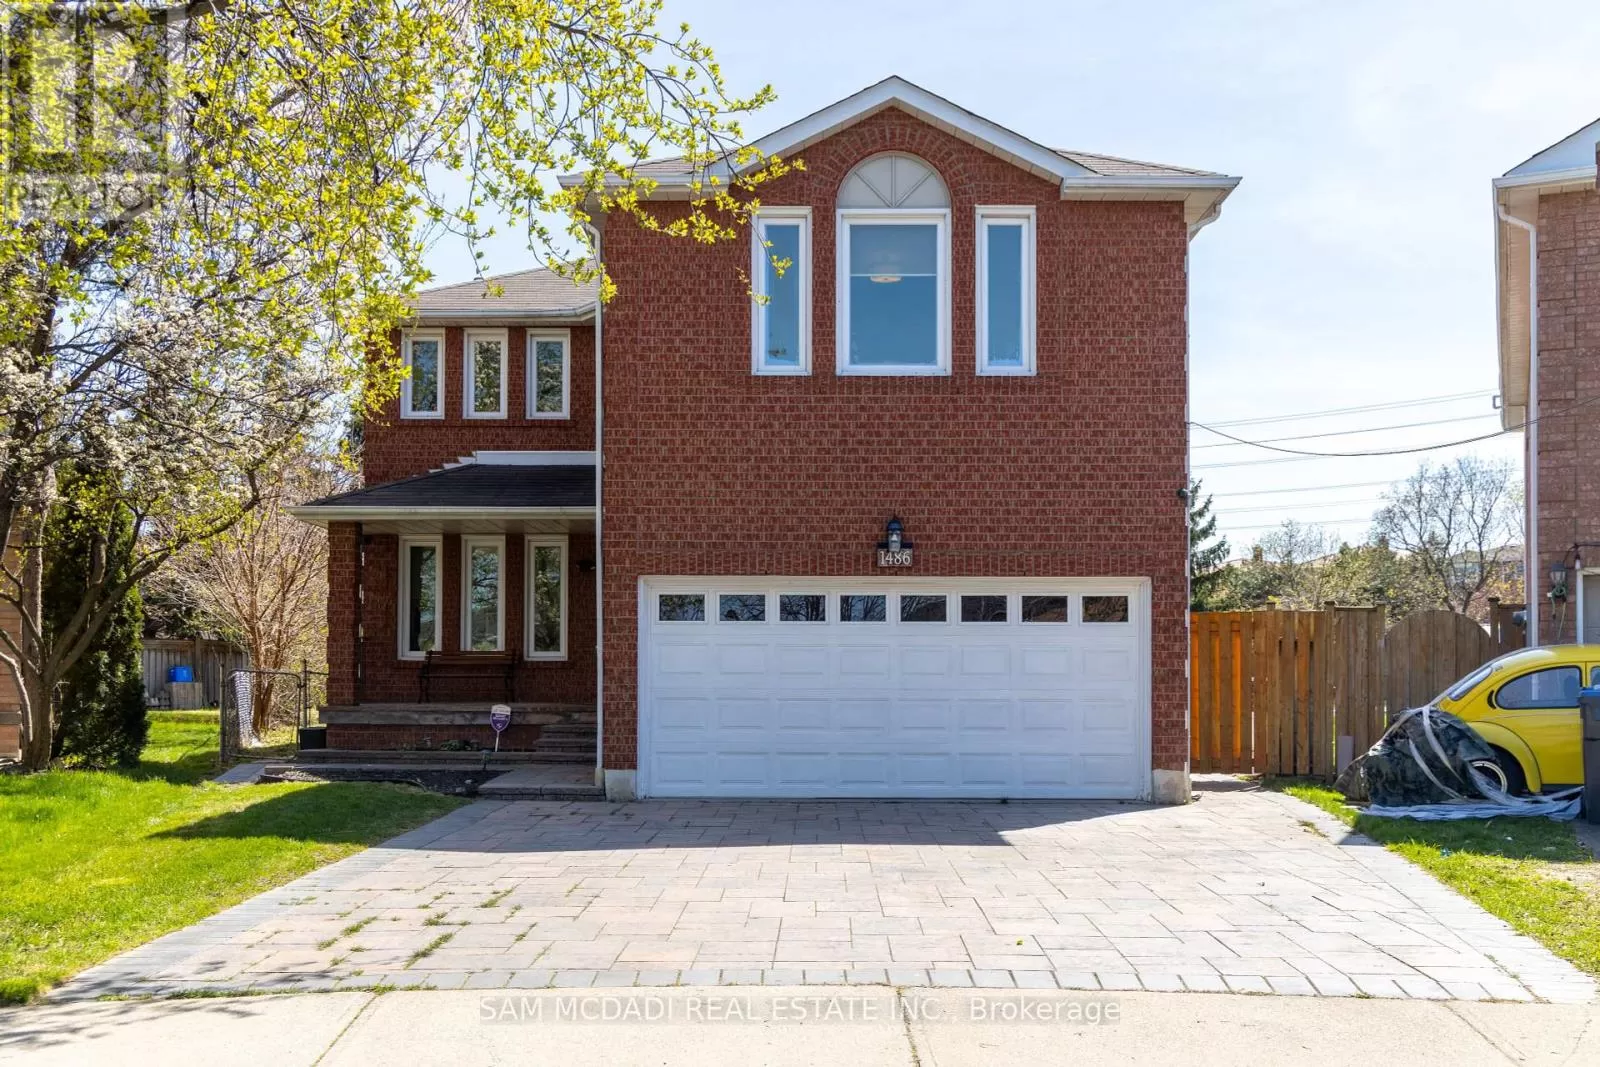 House for rent: 1486 Emerson Lane, Mississauga, Ontario L5V 1L6